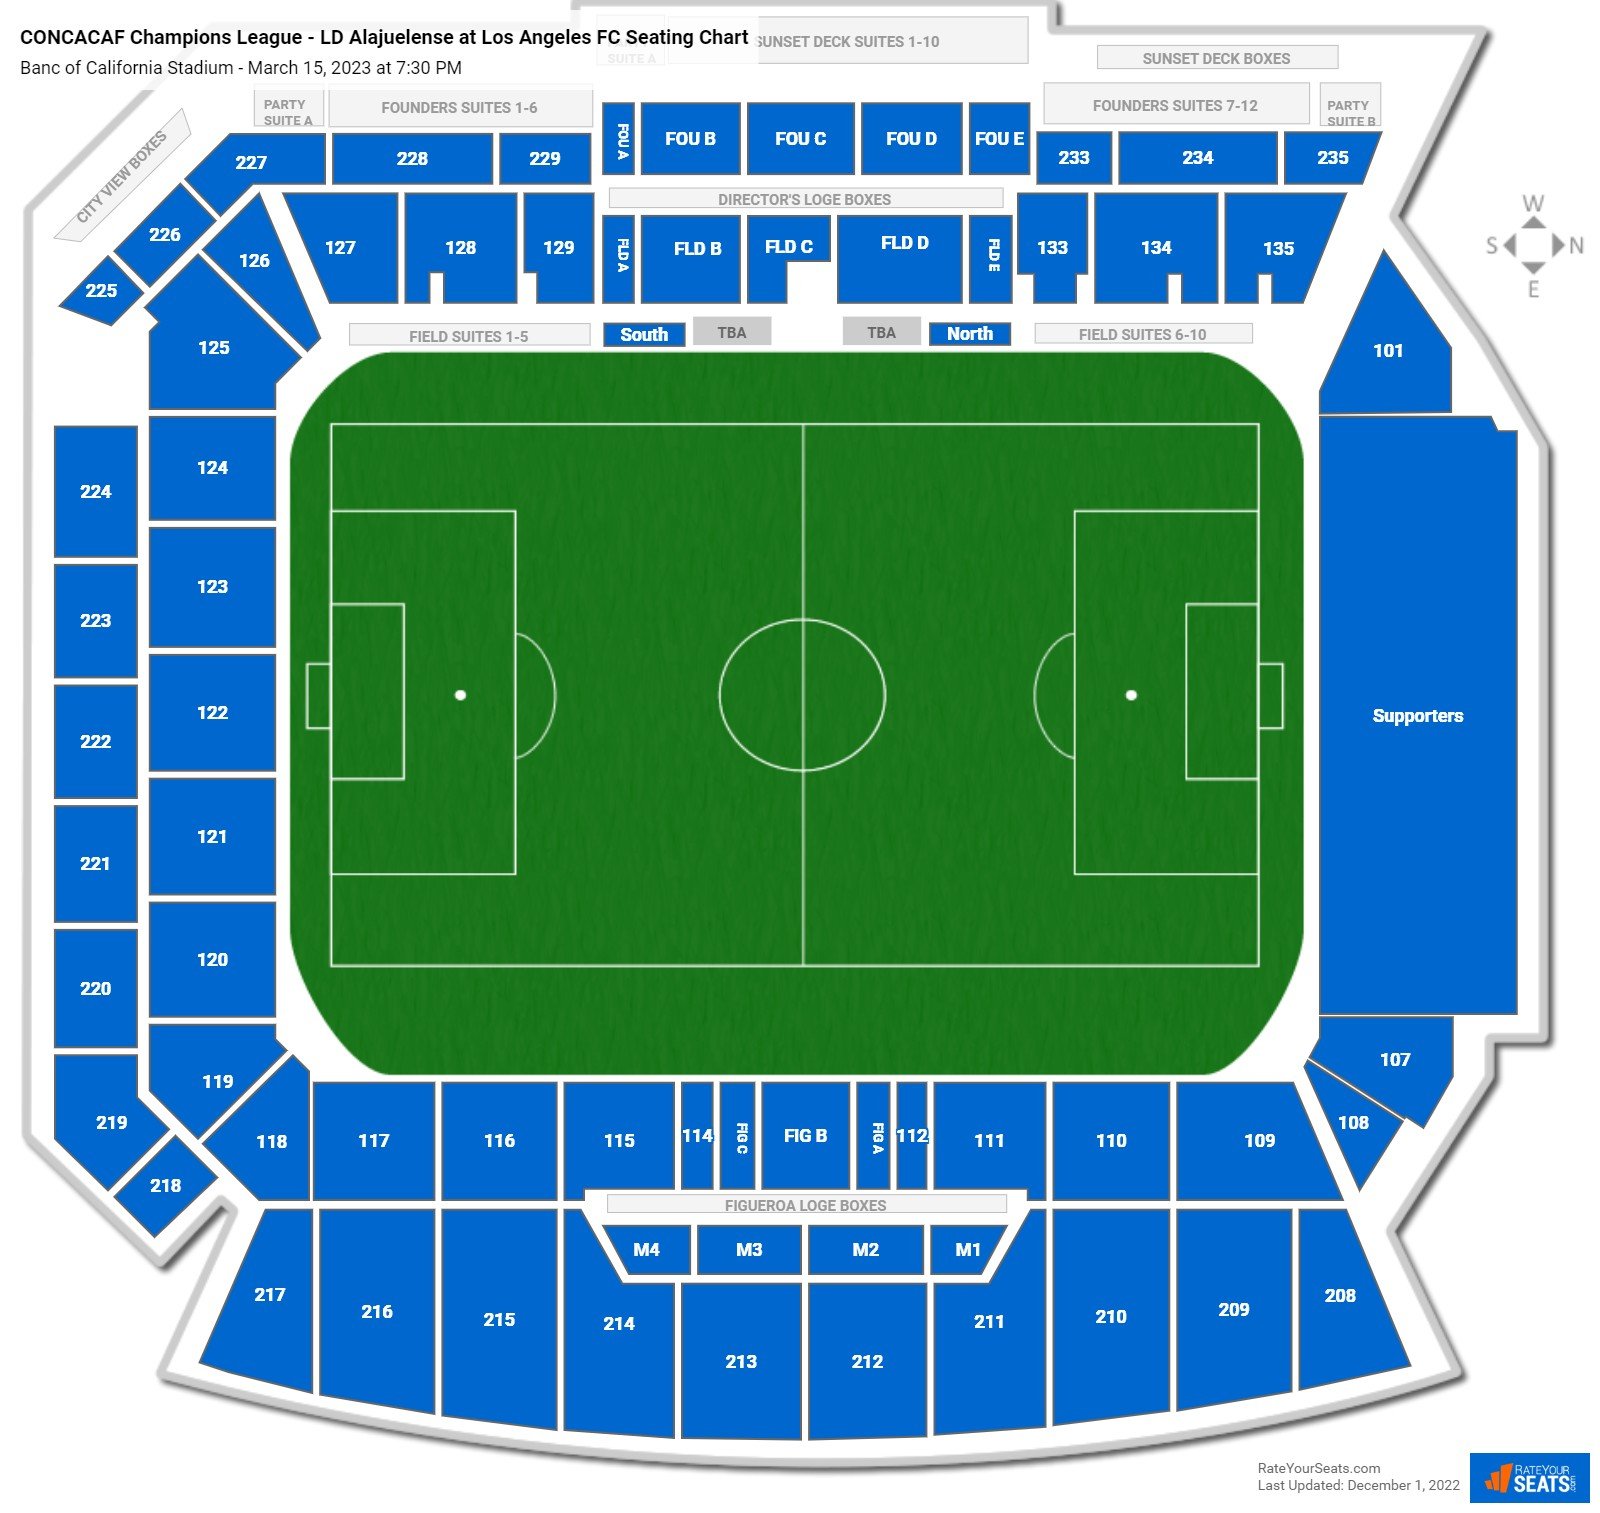 BMO Stadium Concert Seating Chart